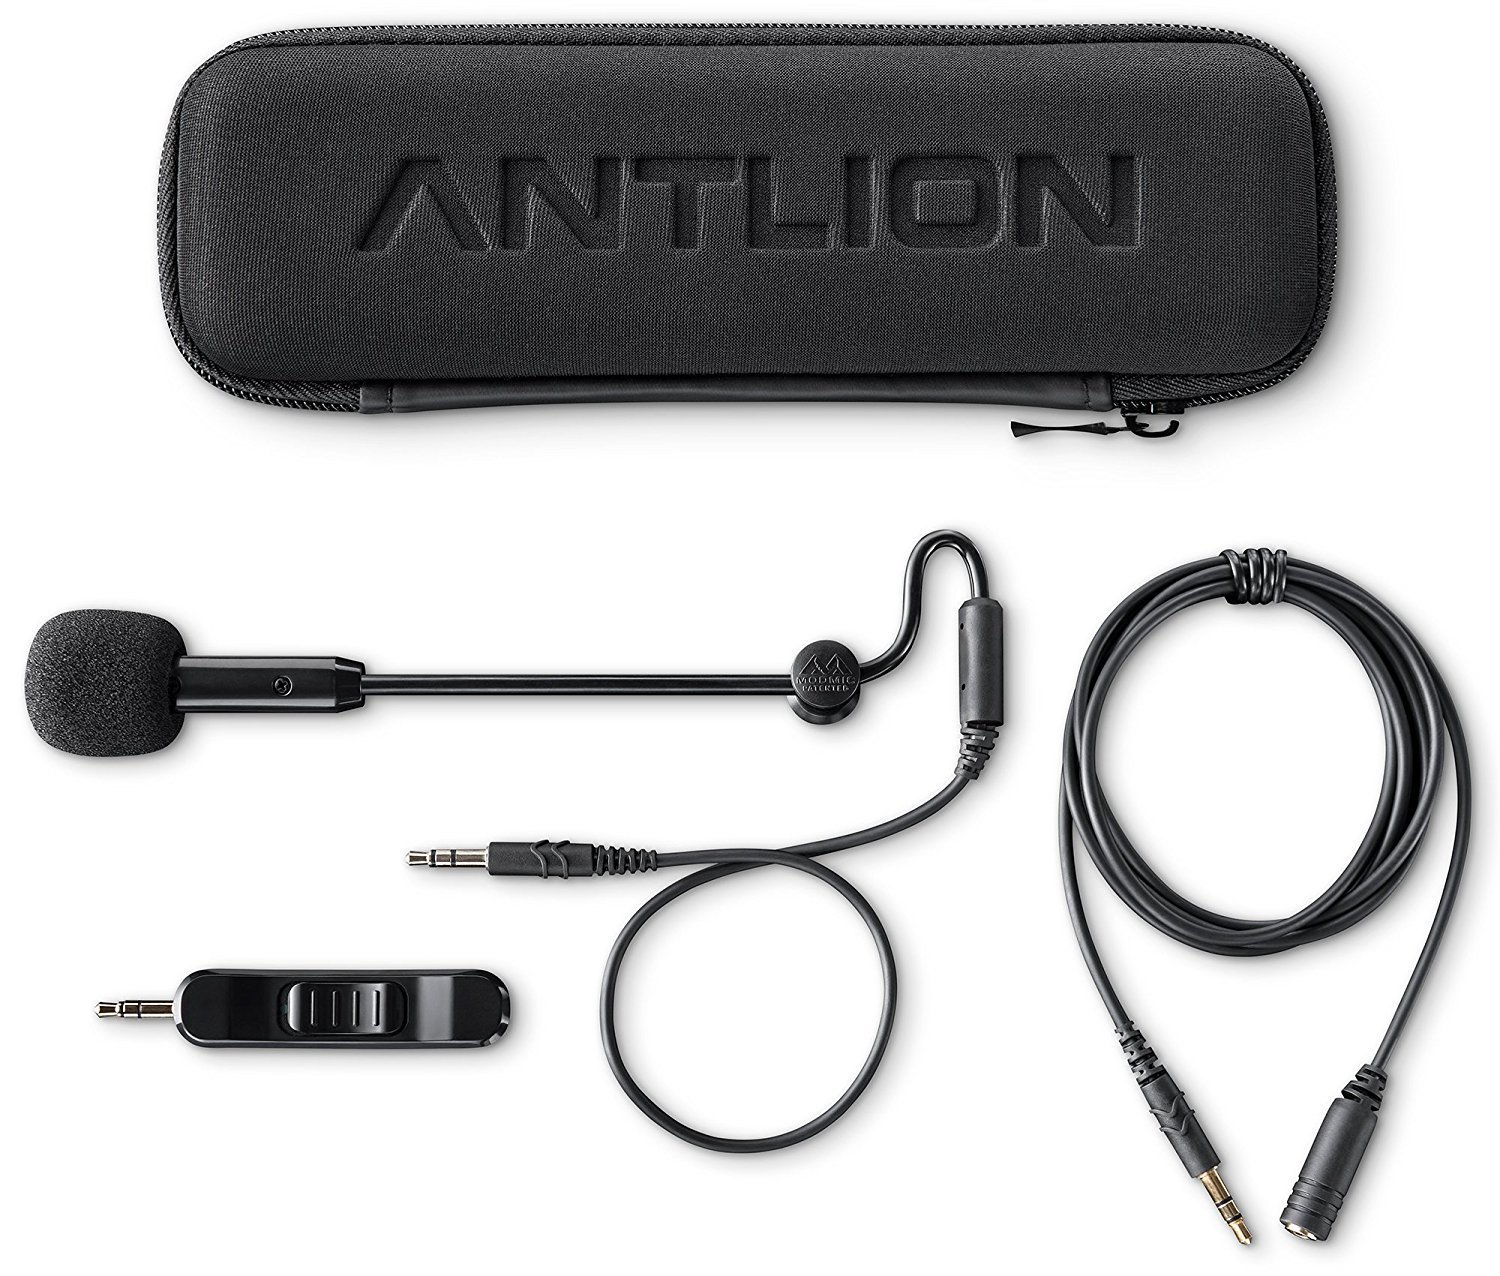 Antlion ModMic 5 Modular Microphone Review - Legit Reviews